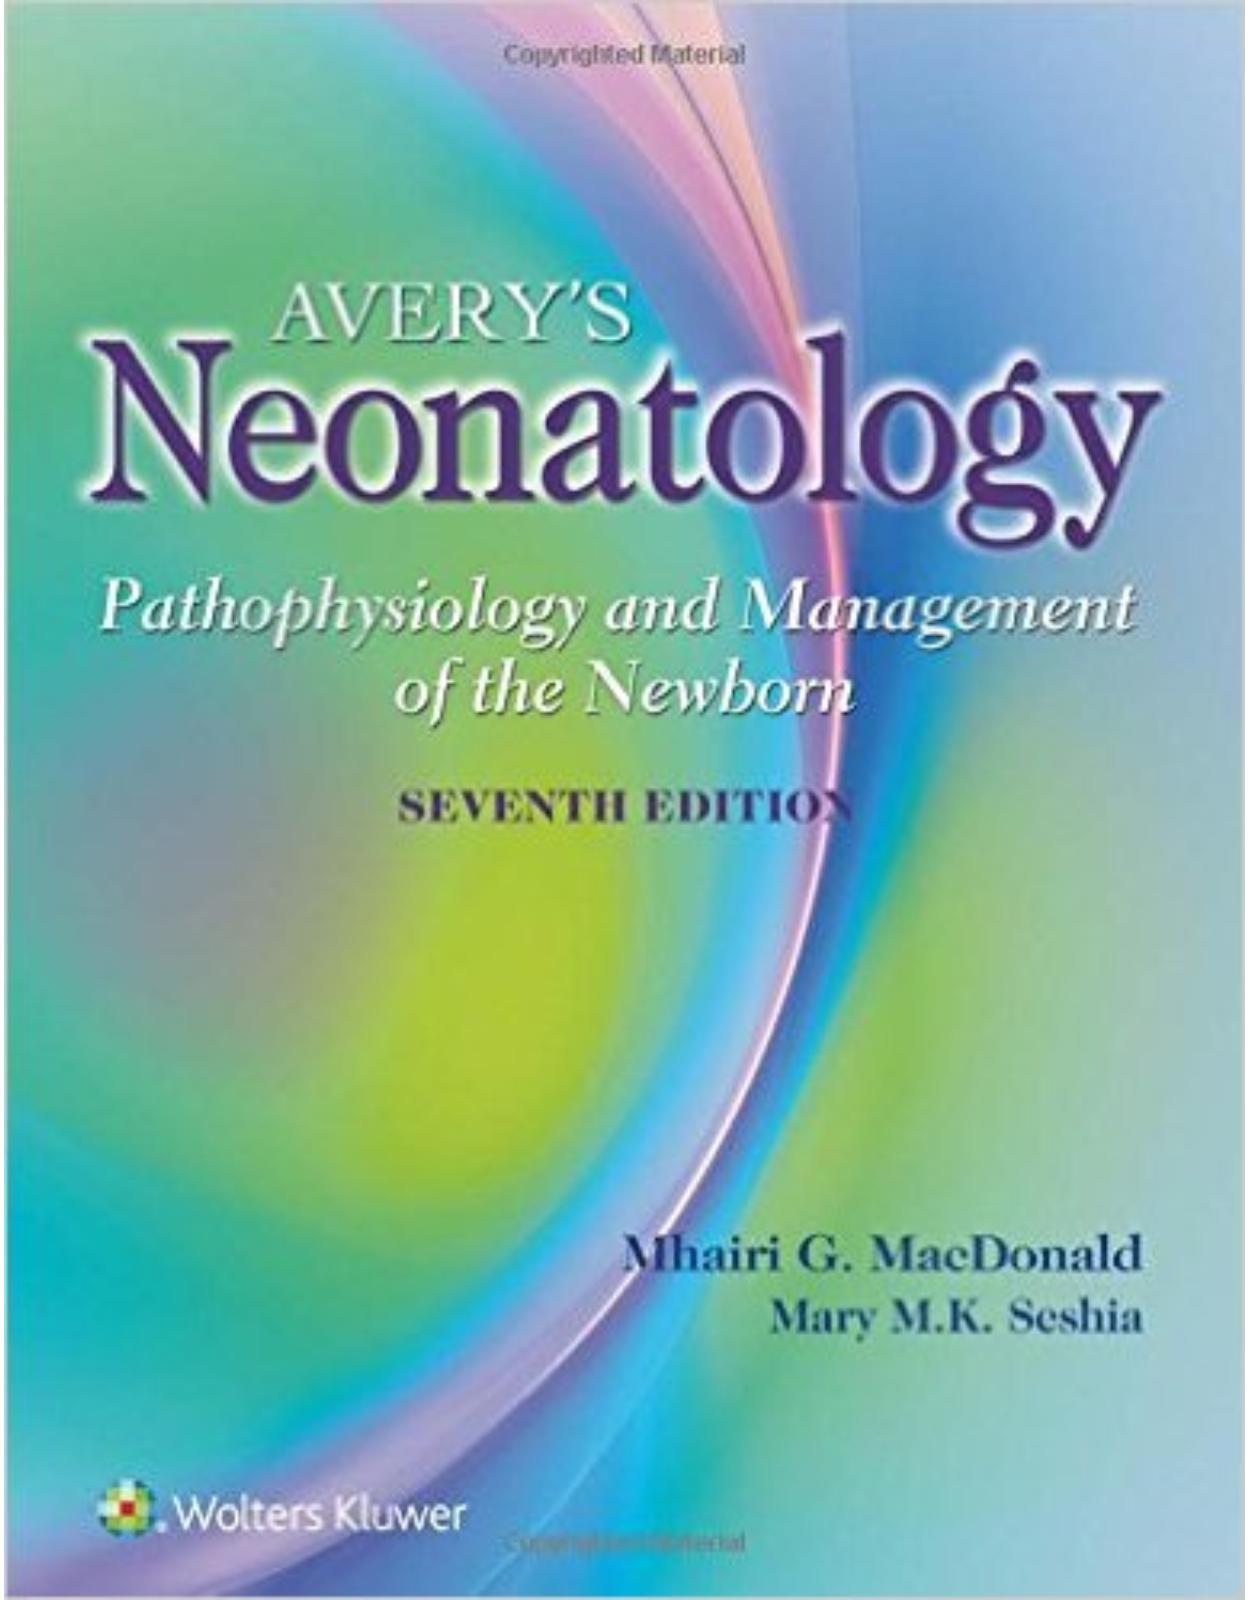 Avery's Neonatology: Pathophysiology and Management of the Newborn (Avery's Neonatology Pathophusiology and Management of the Newborn) Seventh Edition